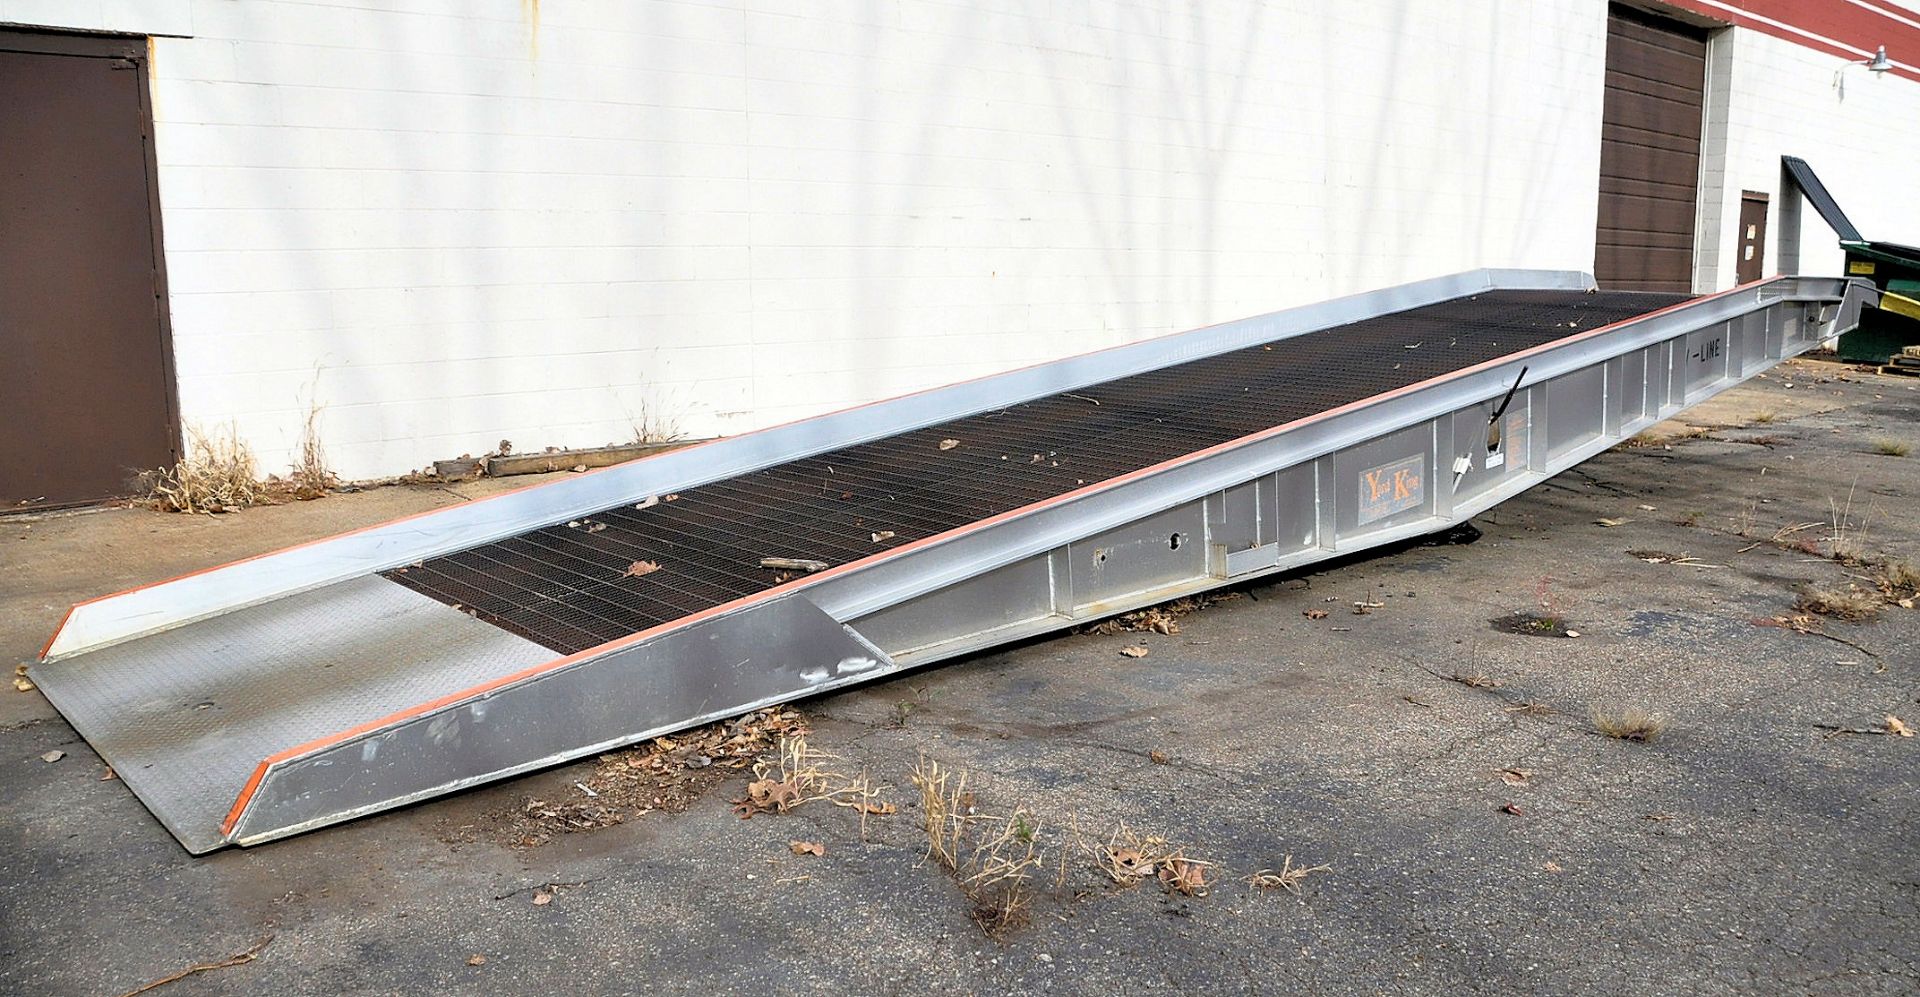 Yard King 7' x 35' Aluminum Portable Dock Ramp, (Outside South Yard) - Image 2 of 3